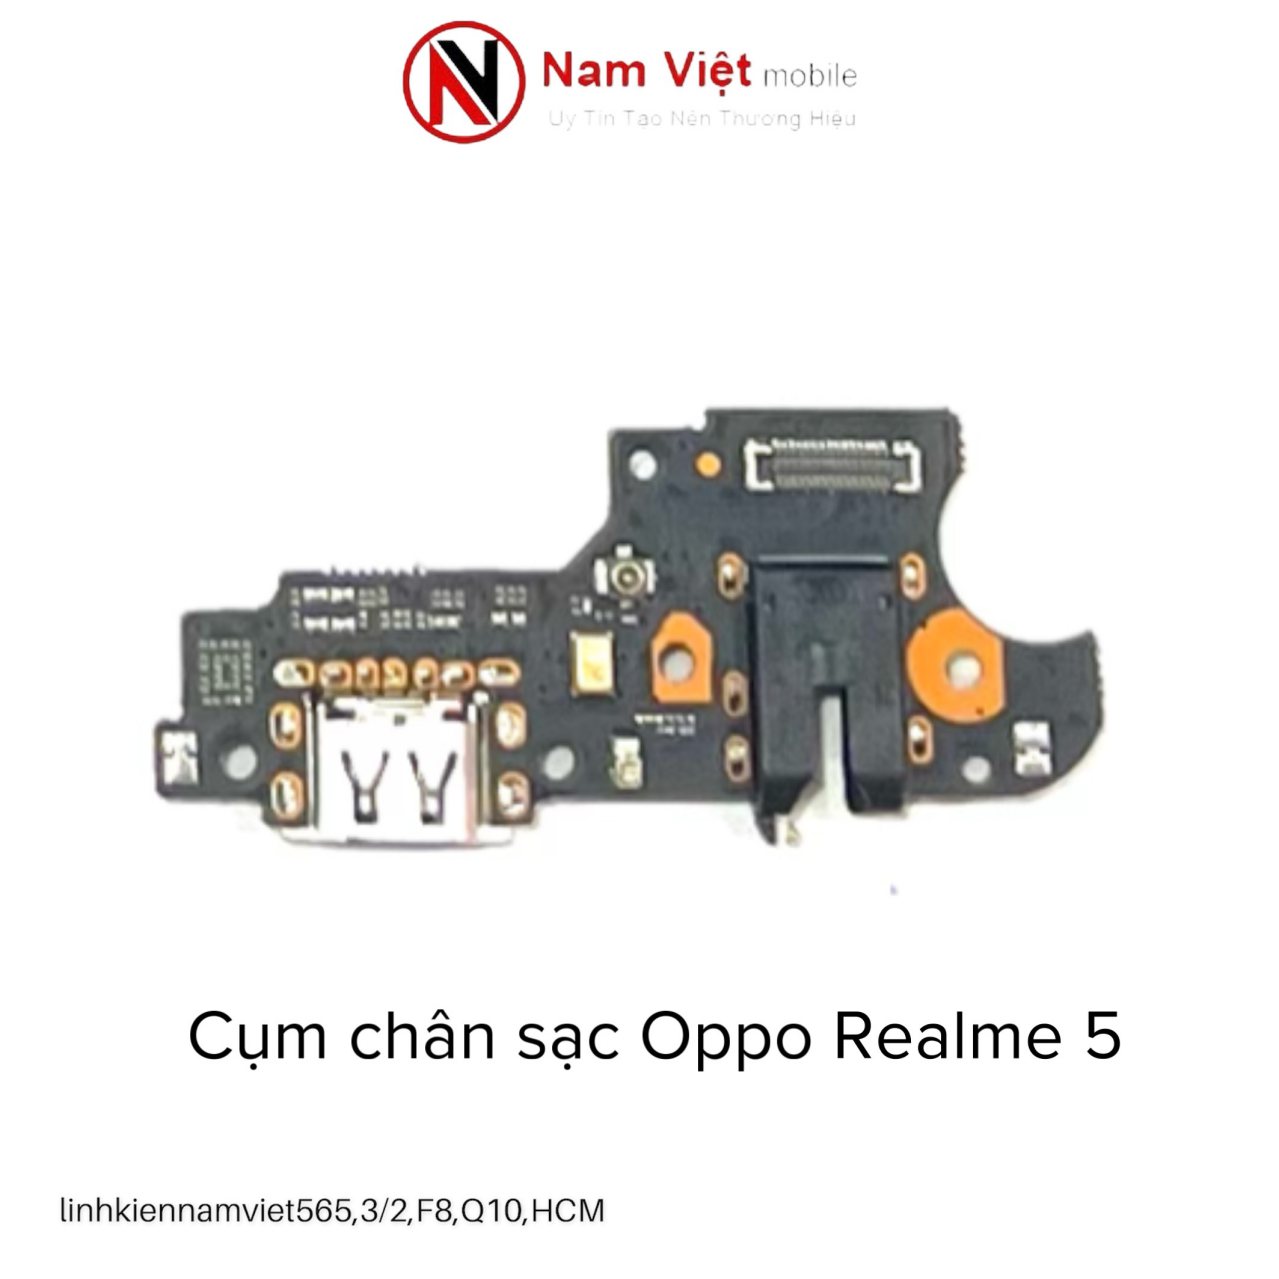 Cụm chân sạc Oppo Realme 5